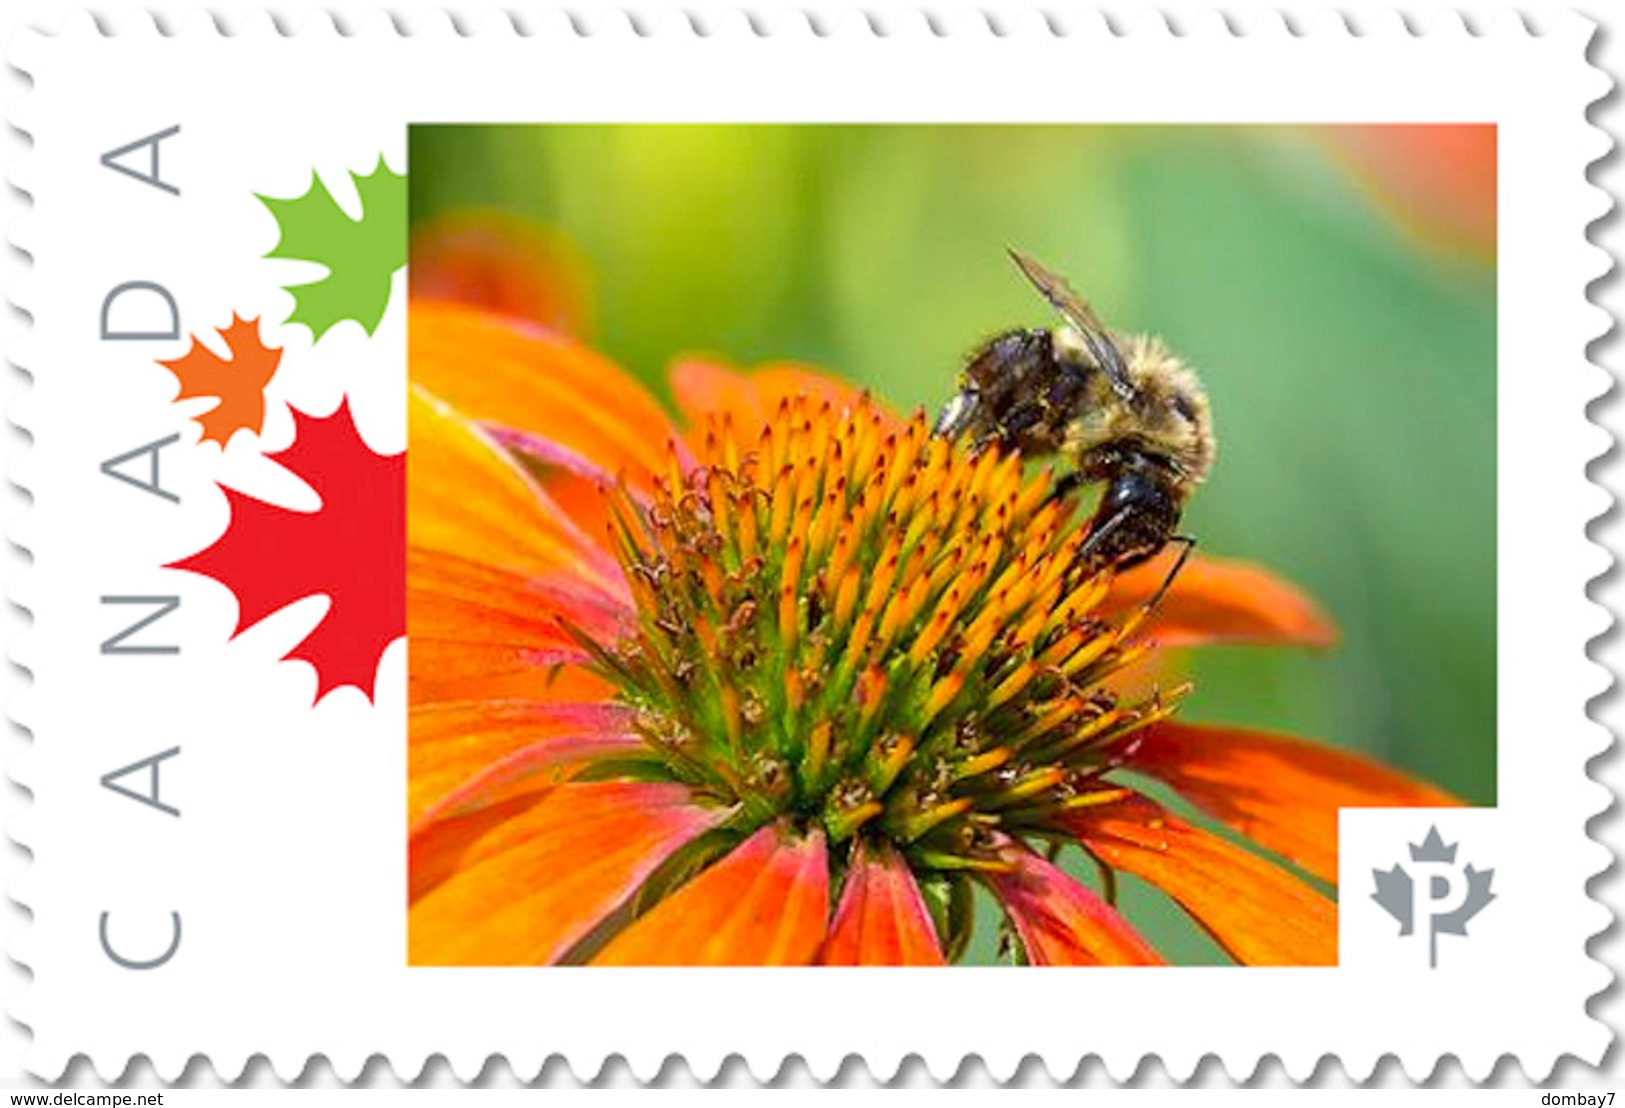 BEE, HONEYBEE On ECHINACEA FLOWER Picture Postage Stamp Canada 2017 P17-04be3-2 - Honeybees